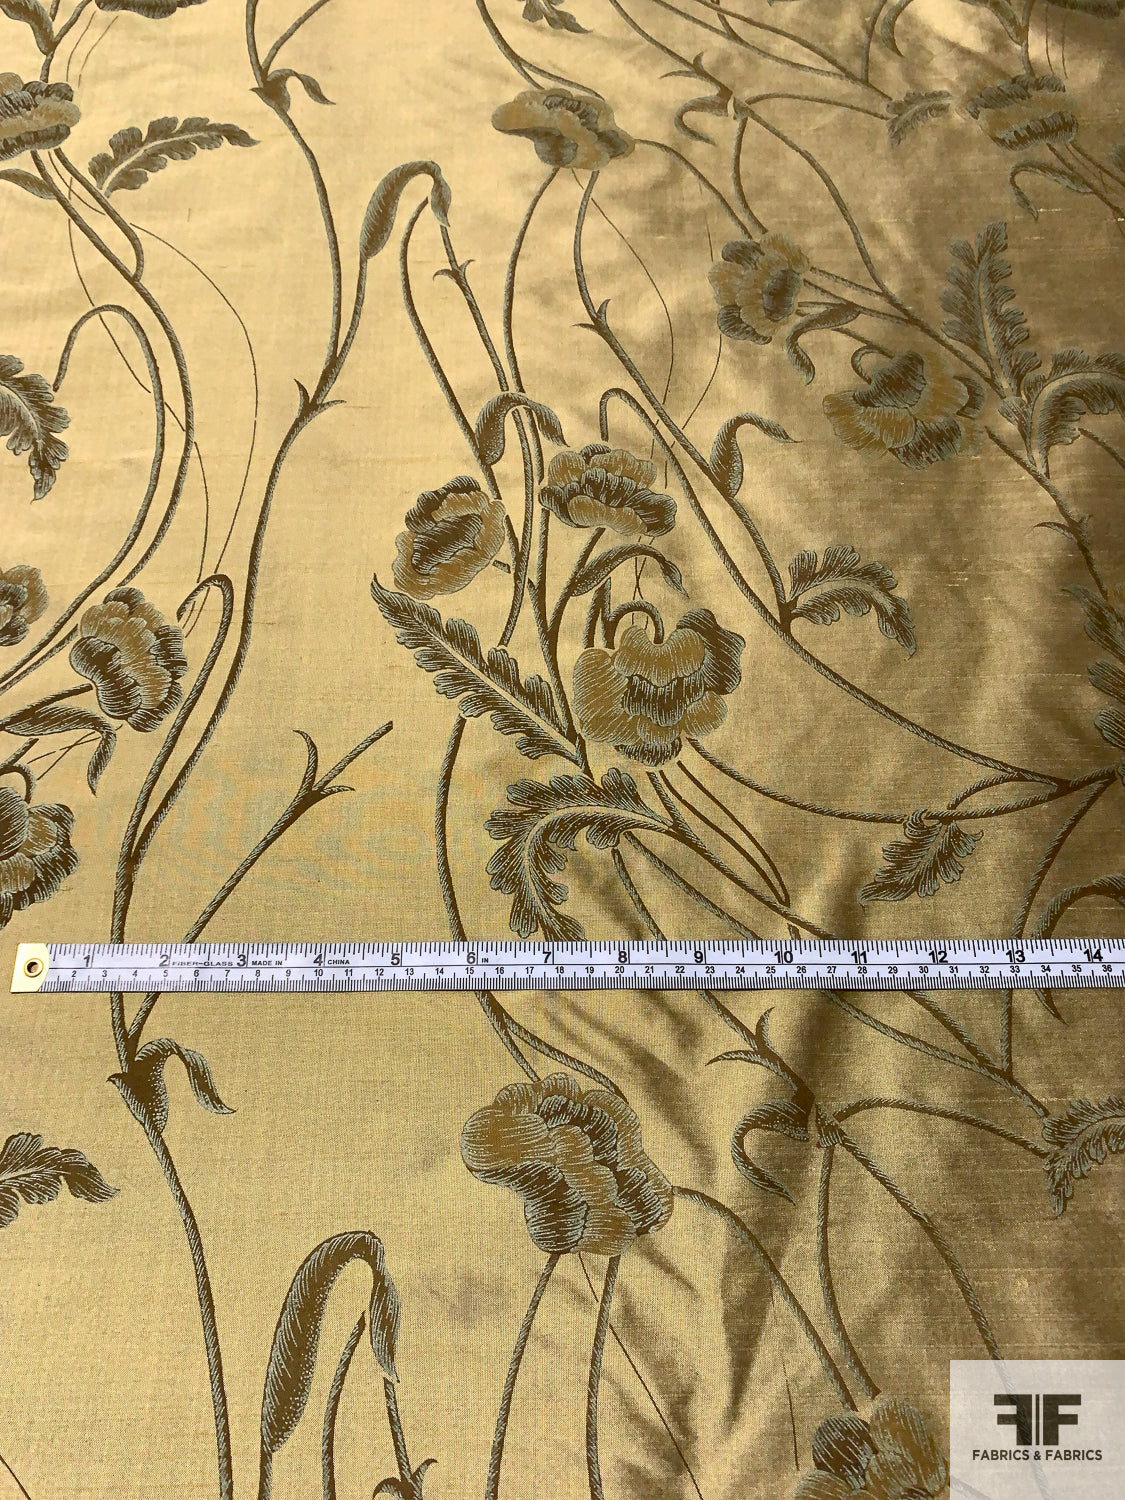 Floral Vines Printed Silk Taffeta-Shantung - Antique Gold / Brown / Sage